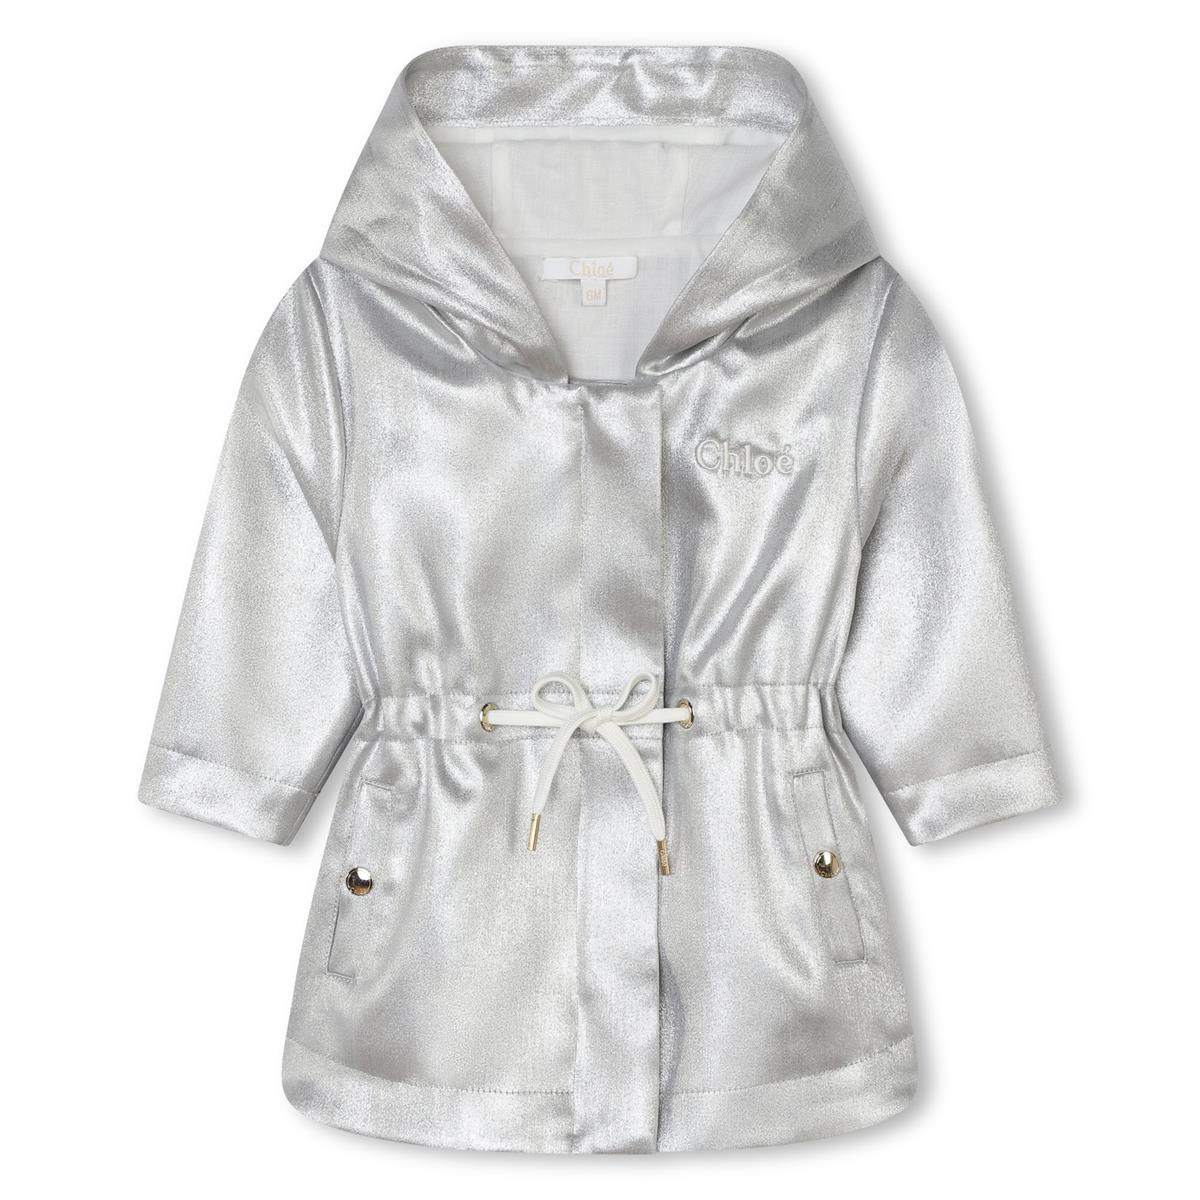 Baby Girls Silver Coat